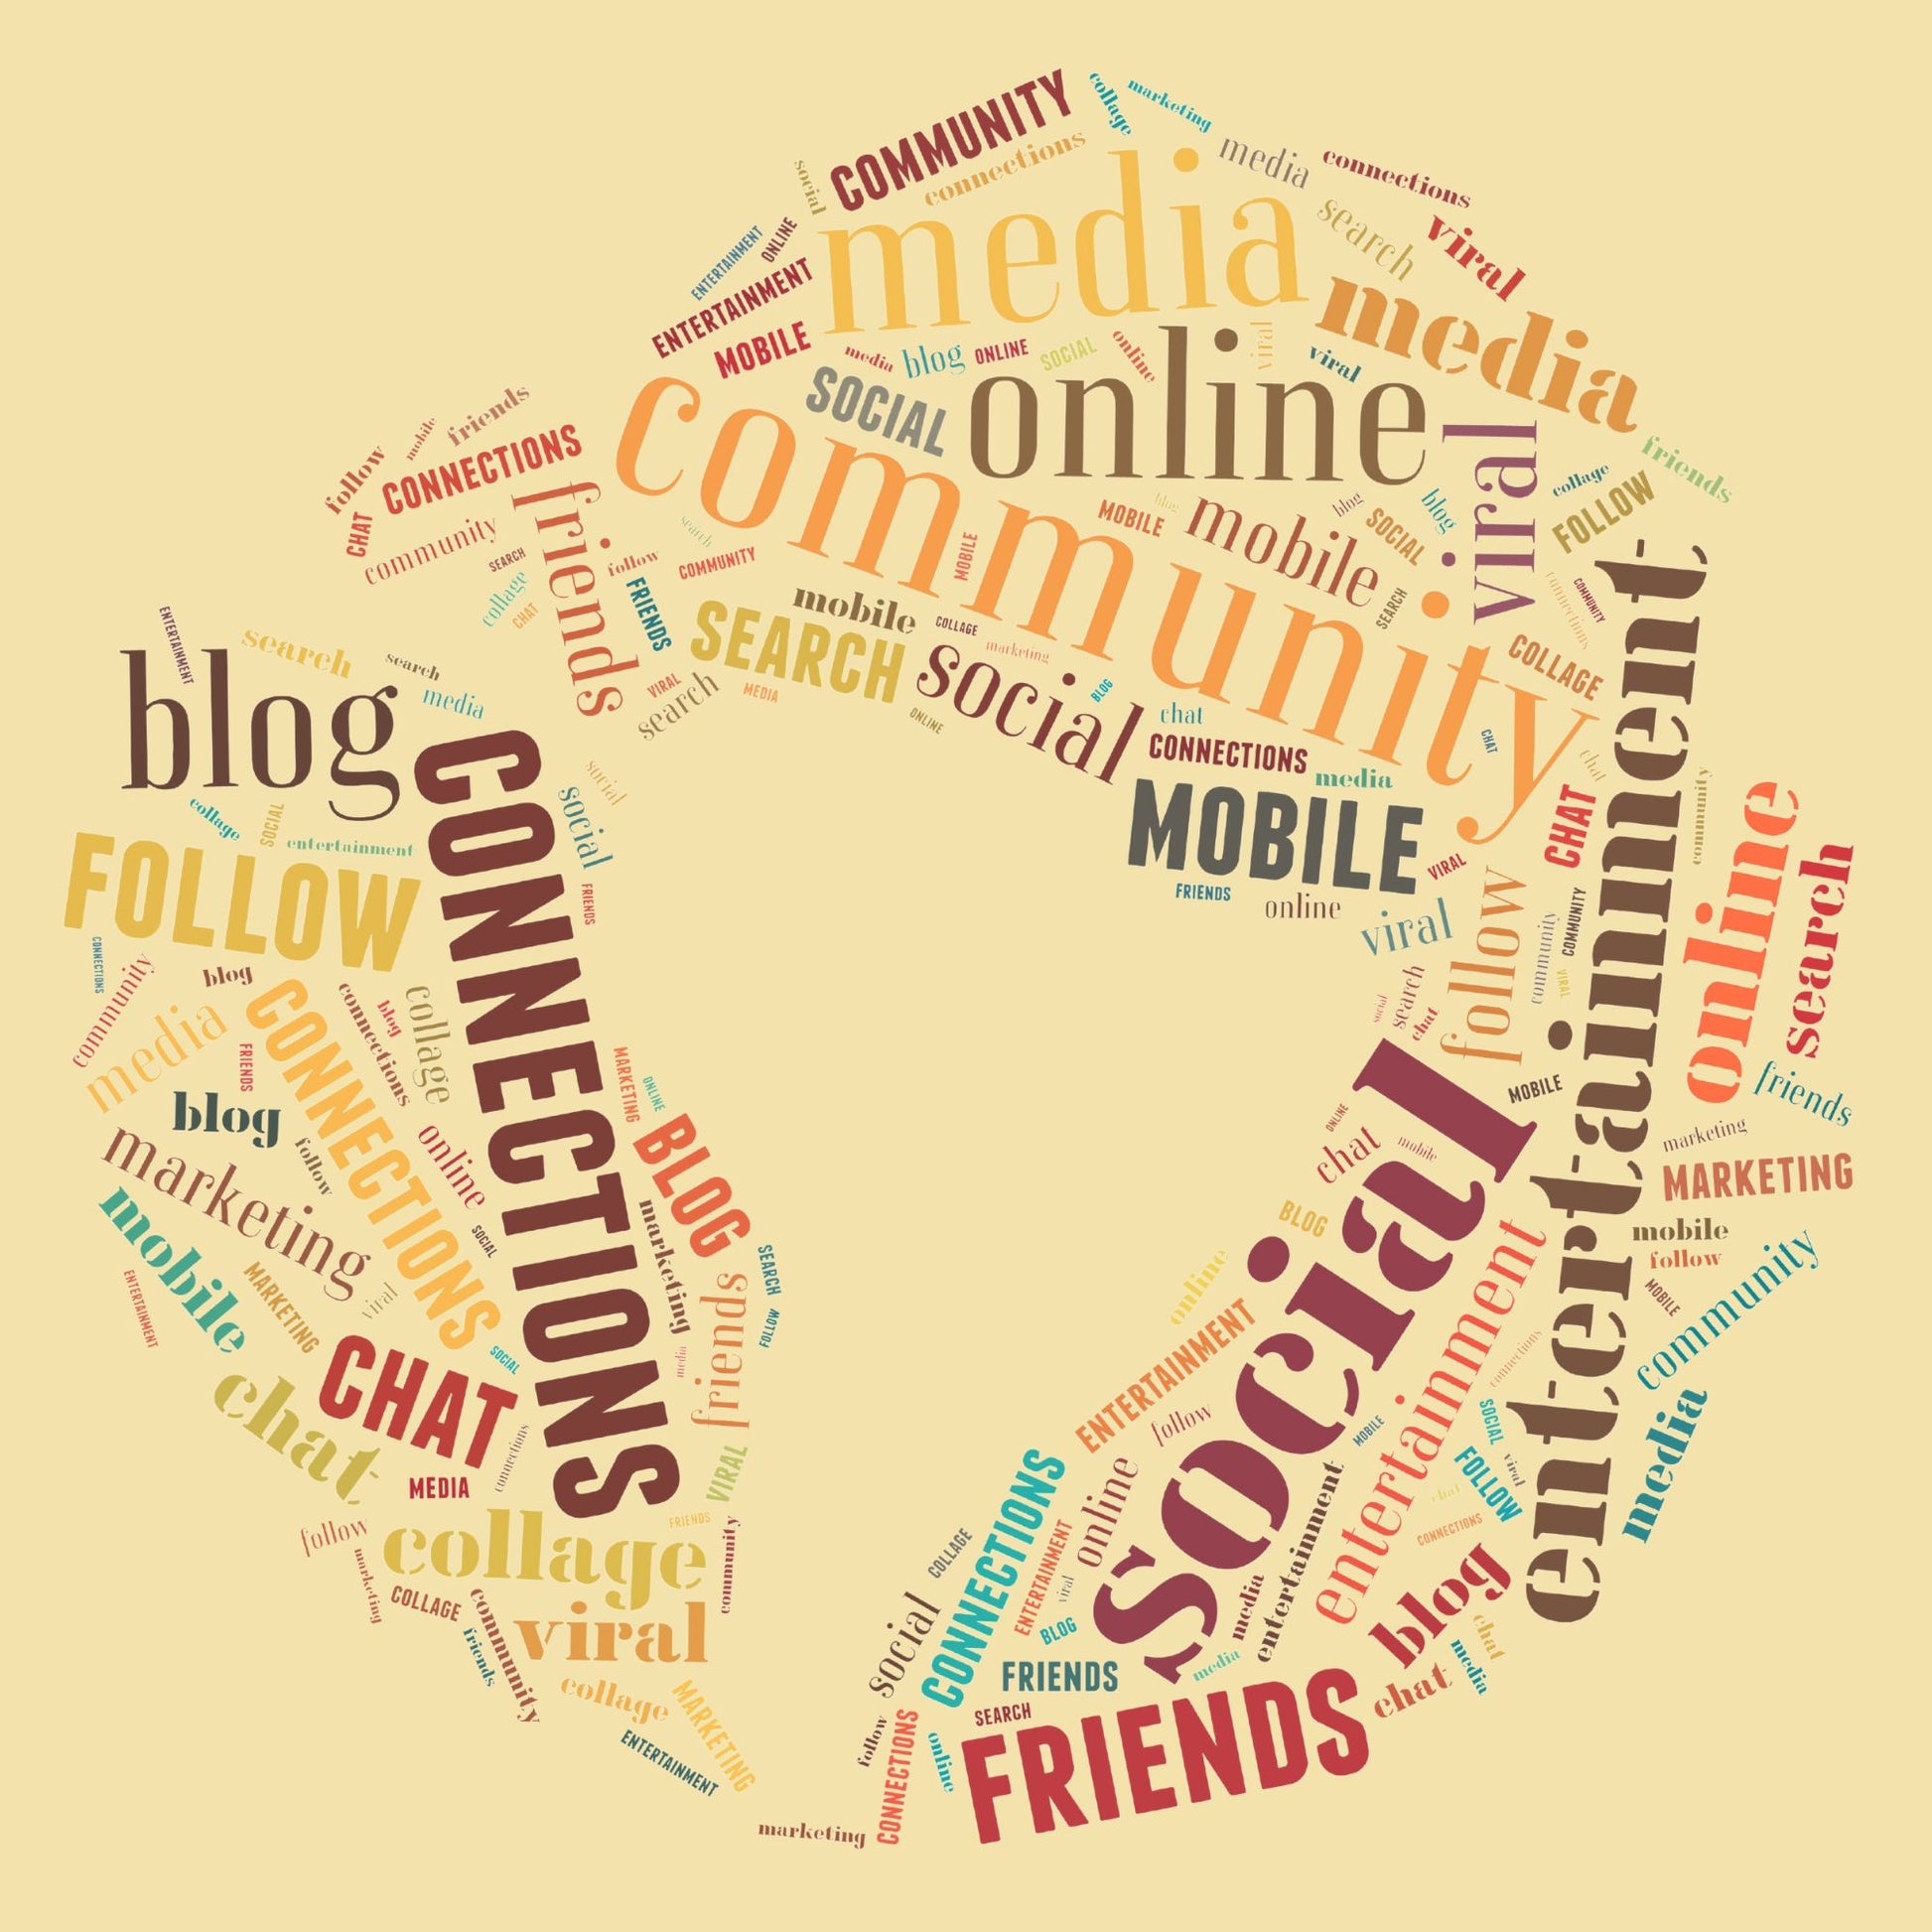 Social media terms in a circle